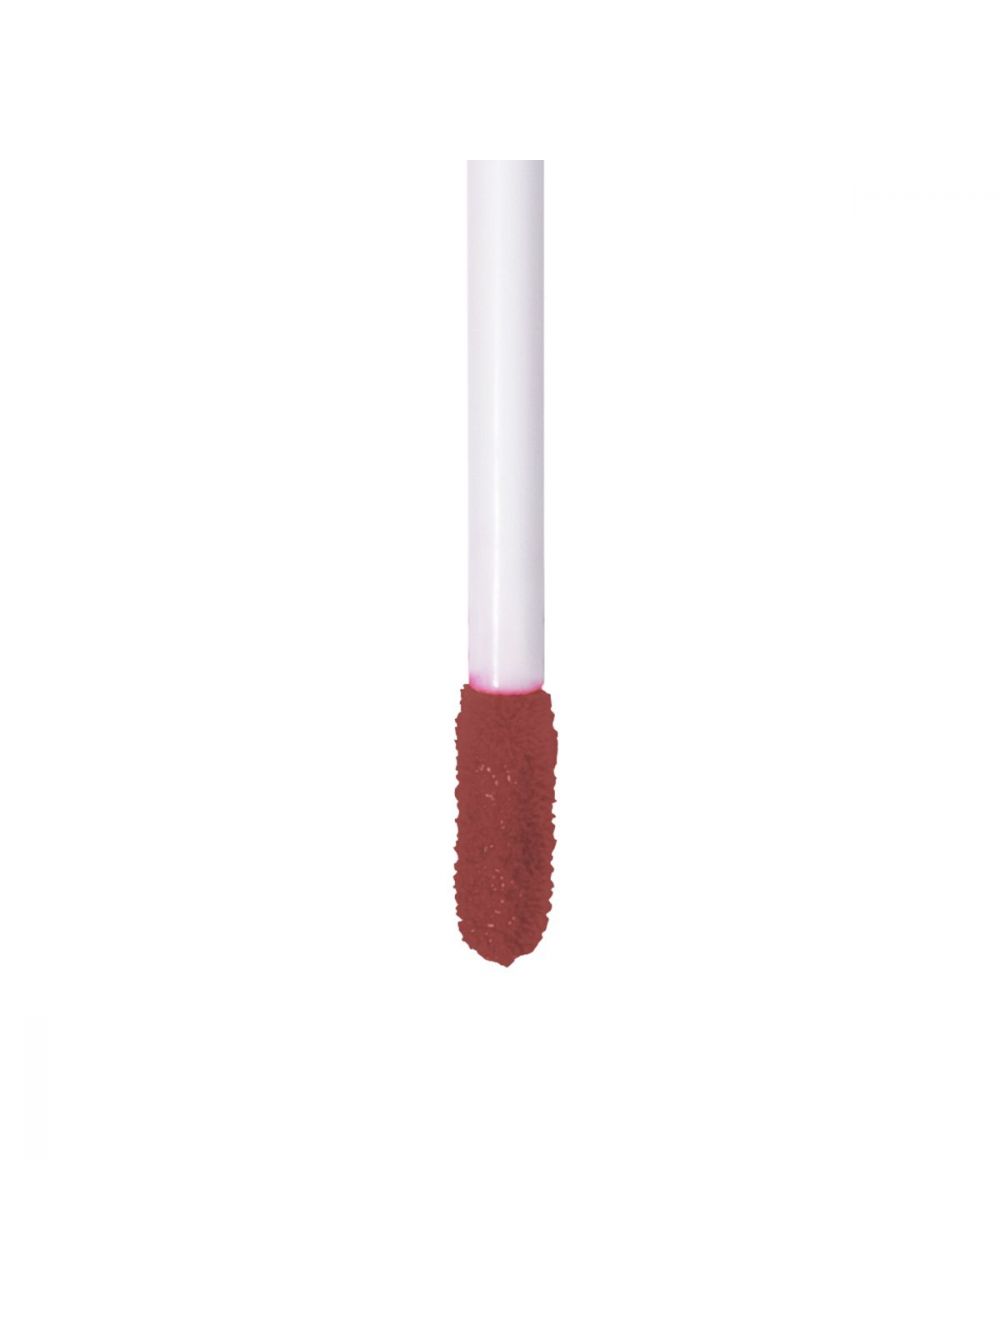 MyGlamm Lit Liquid Matte Lipstick - SHIP